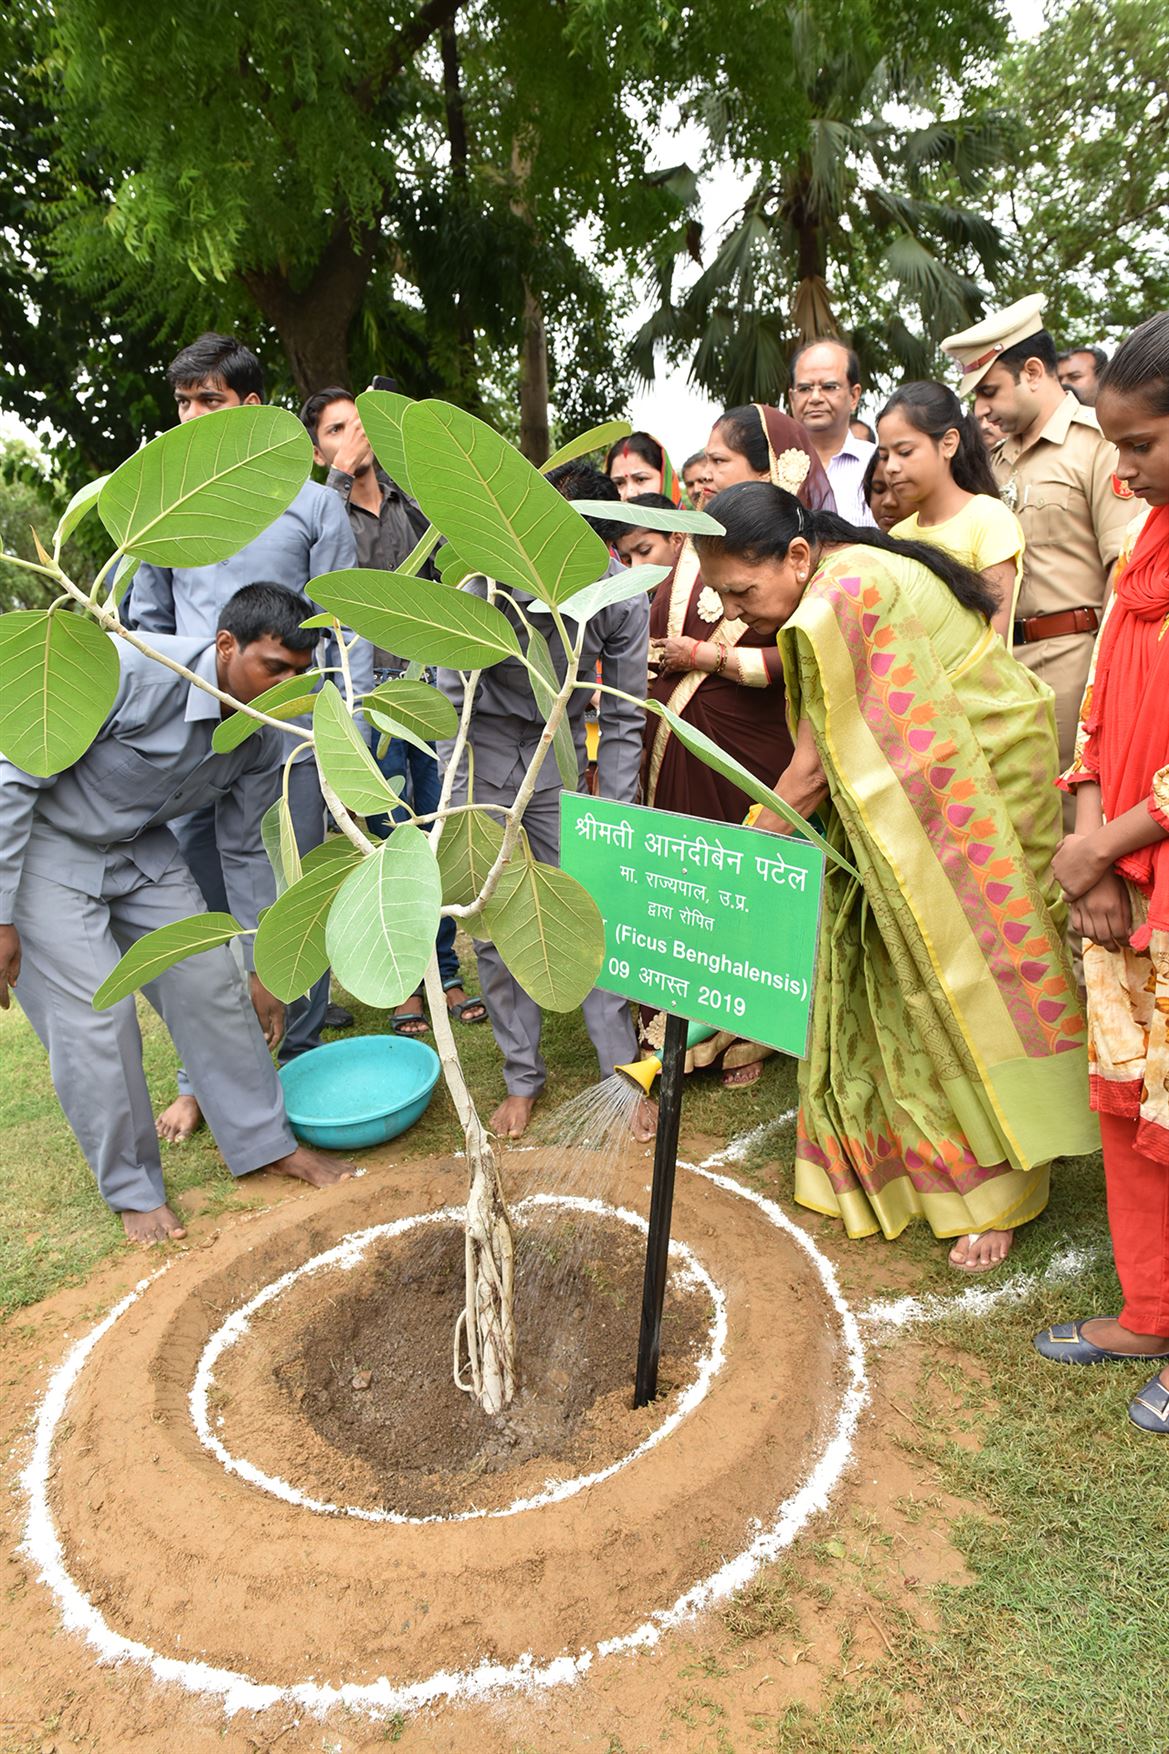 Children of officers and employees of Raj Bhavan planted saplings along with the Governor/राज्यपाल संग राजभवन के बच्चों ने पौधे लगाये 